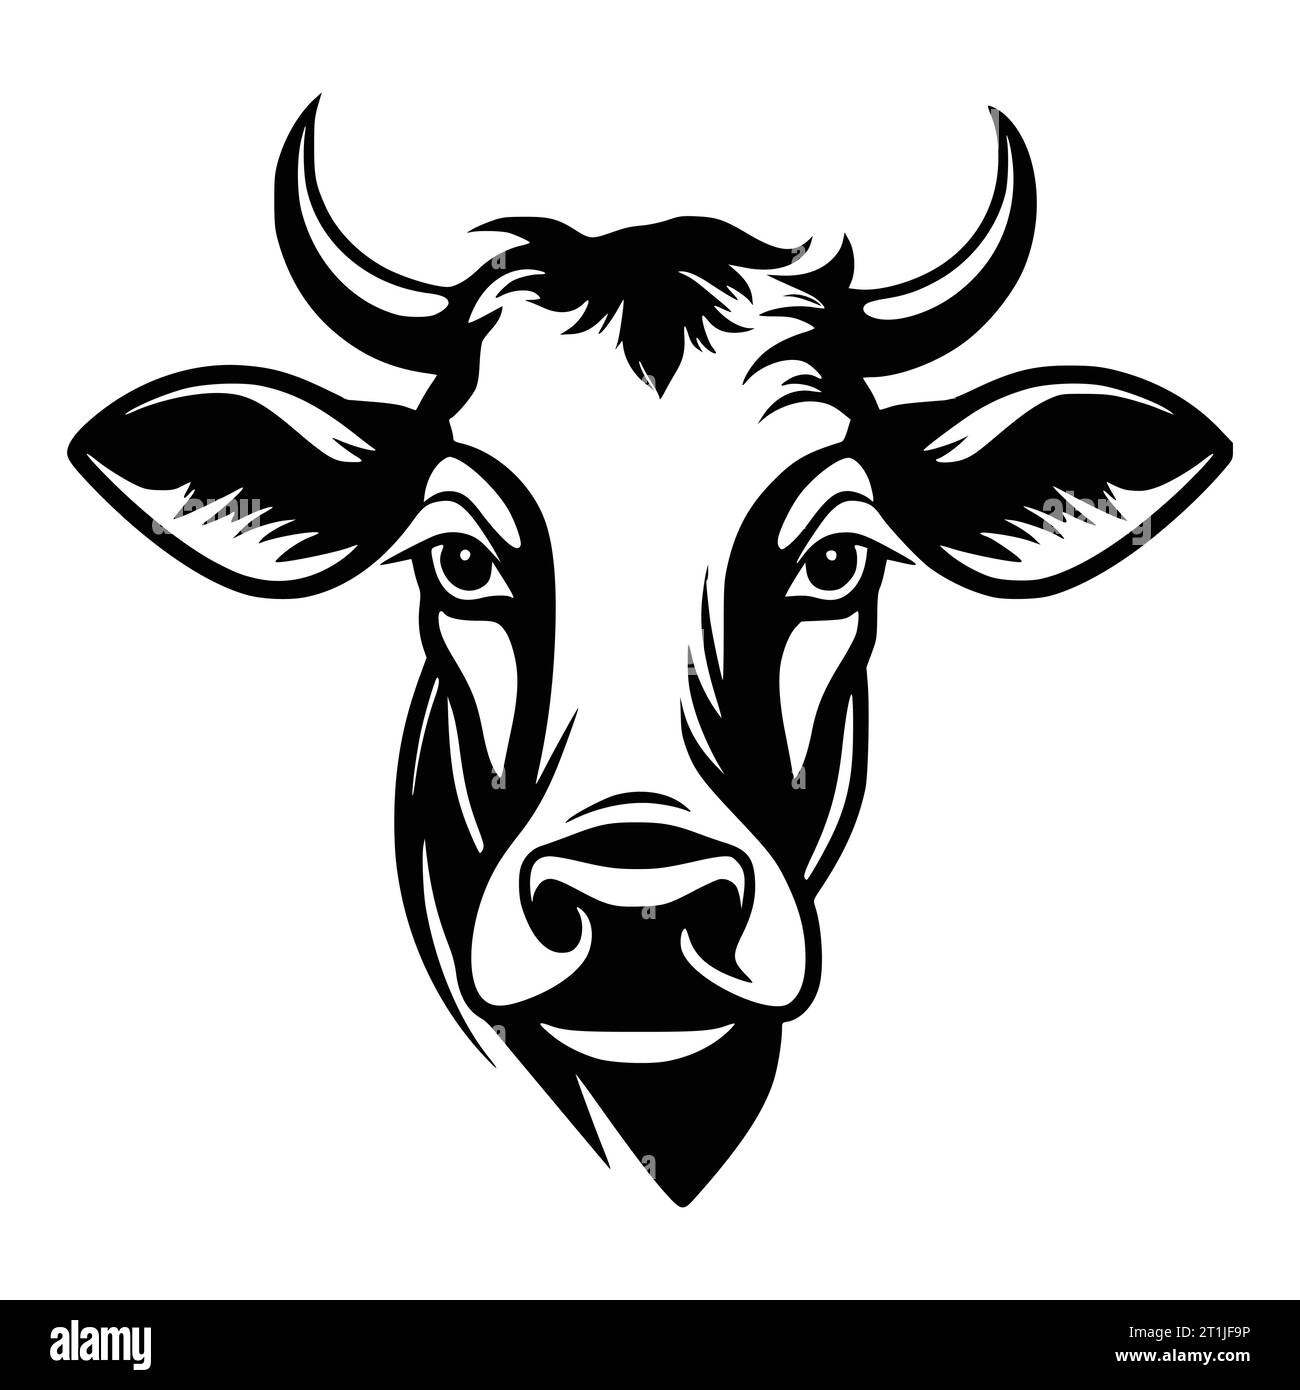 cow mascot animal head illustration for logo or symbol Stock Vector